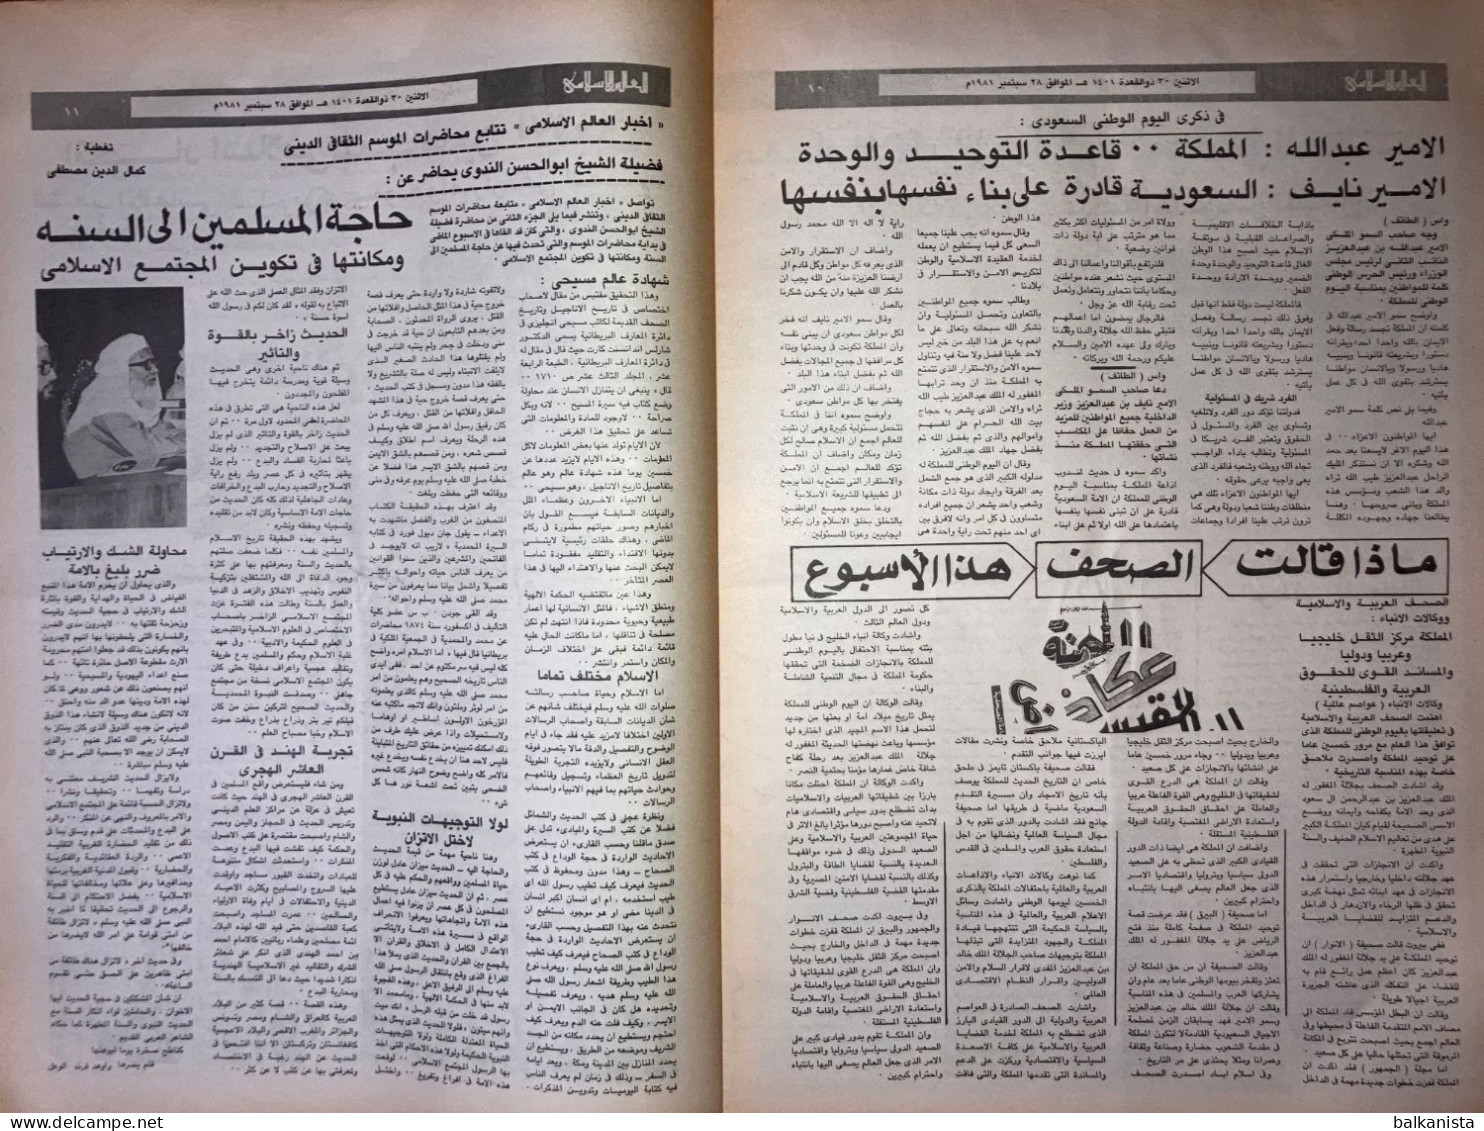 Saudi Arabia Akhbar al-Alam al-Islami Newspaper 28 August 1978